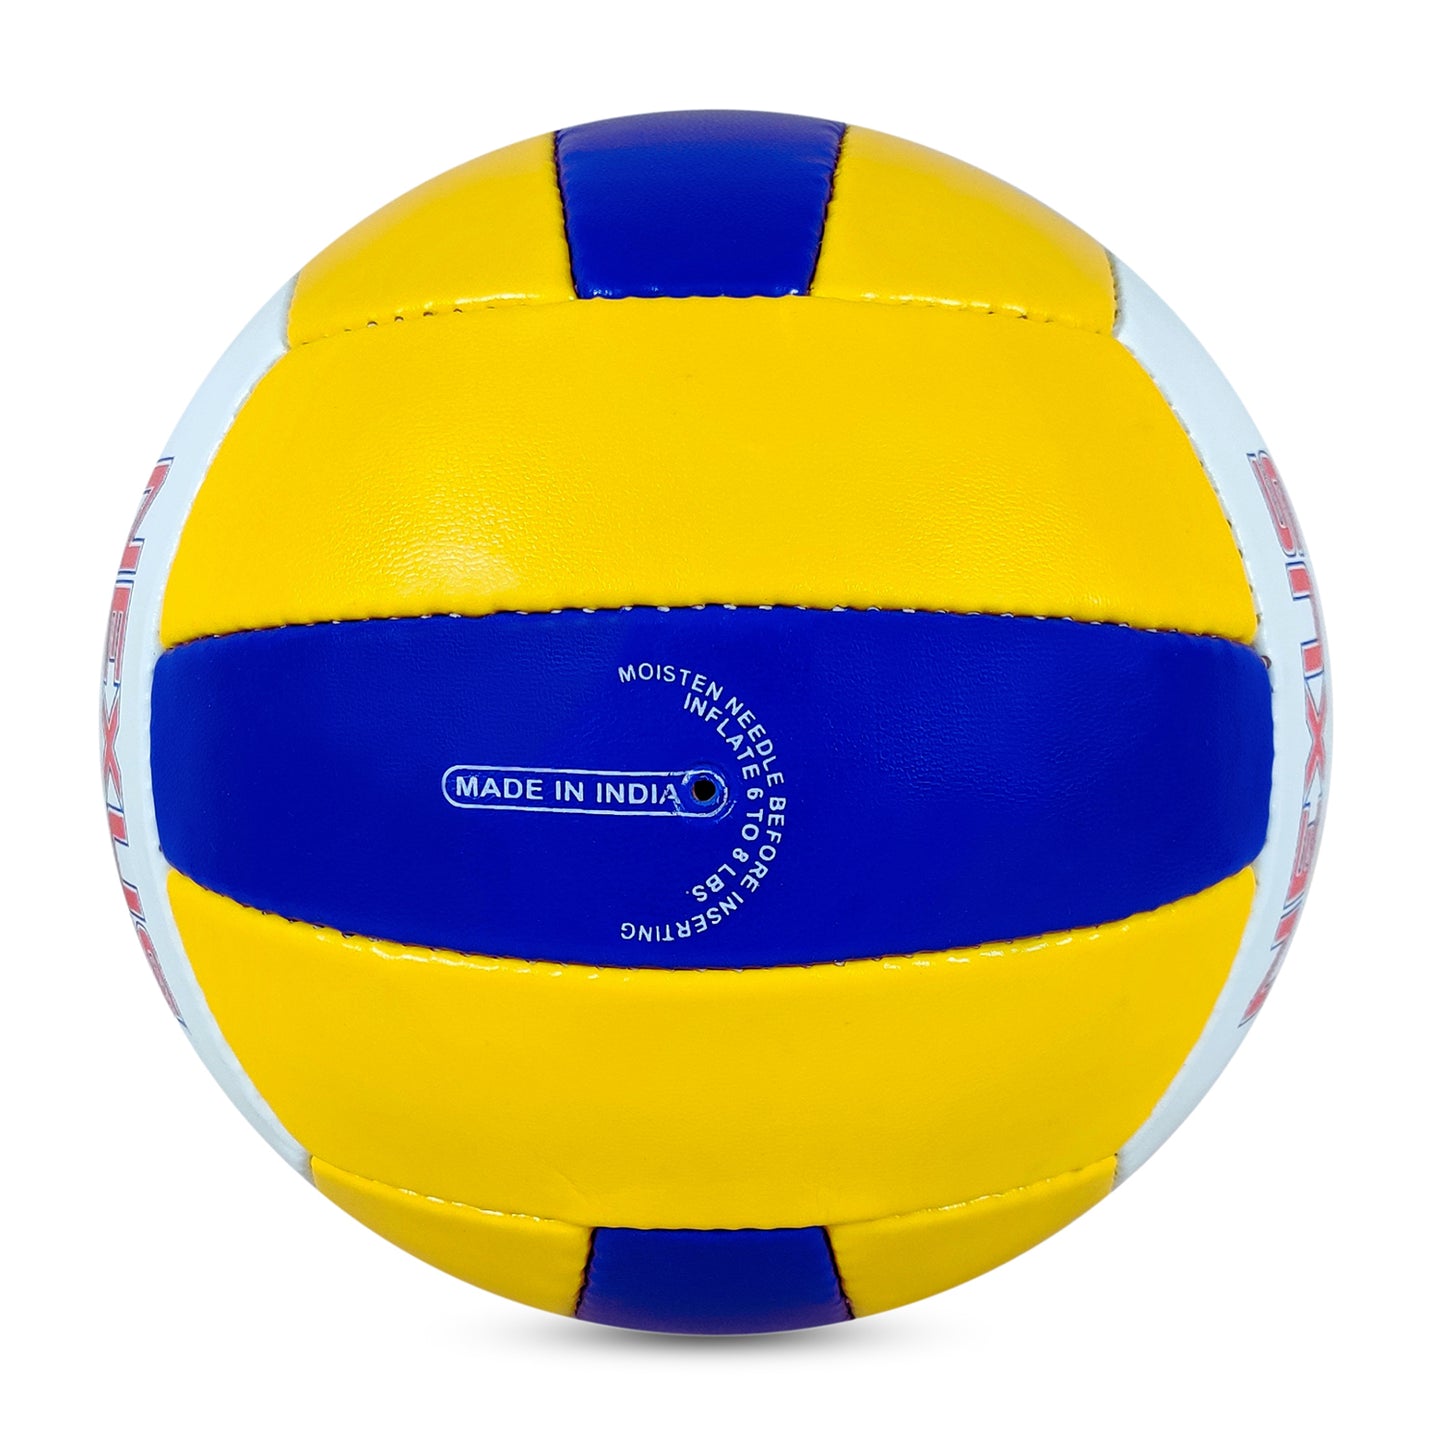 Prokick Nexus Hand Stitched 18-P Volleyball, Yellow/Blue/White (Size 4) - Best Price online Prokicksports.com